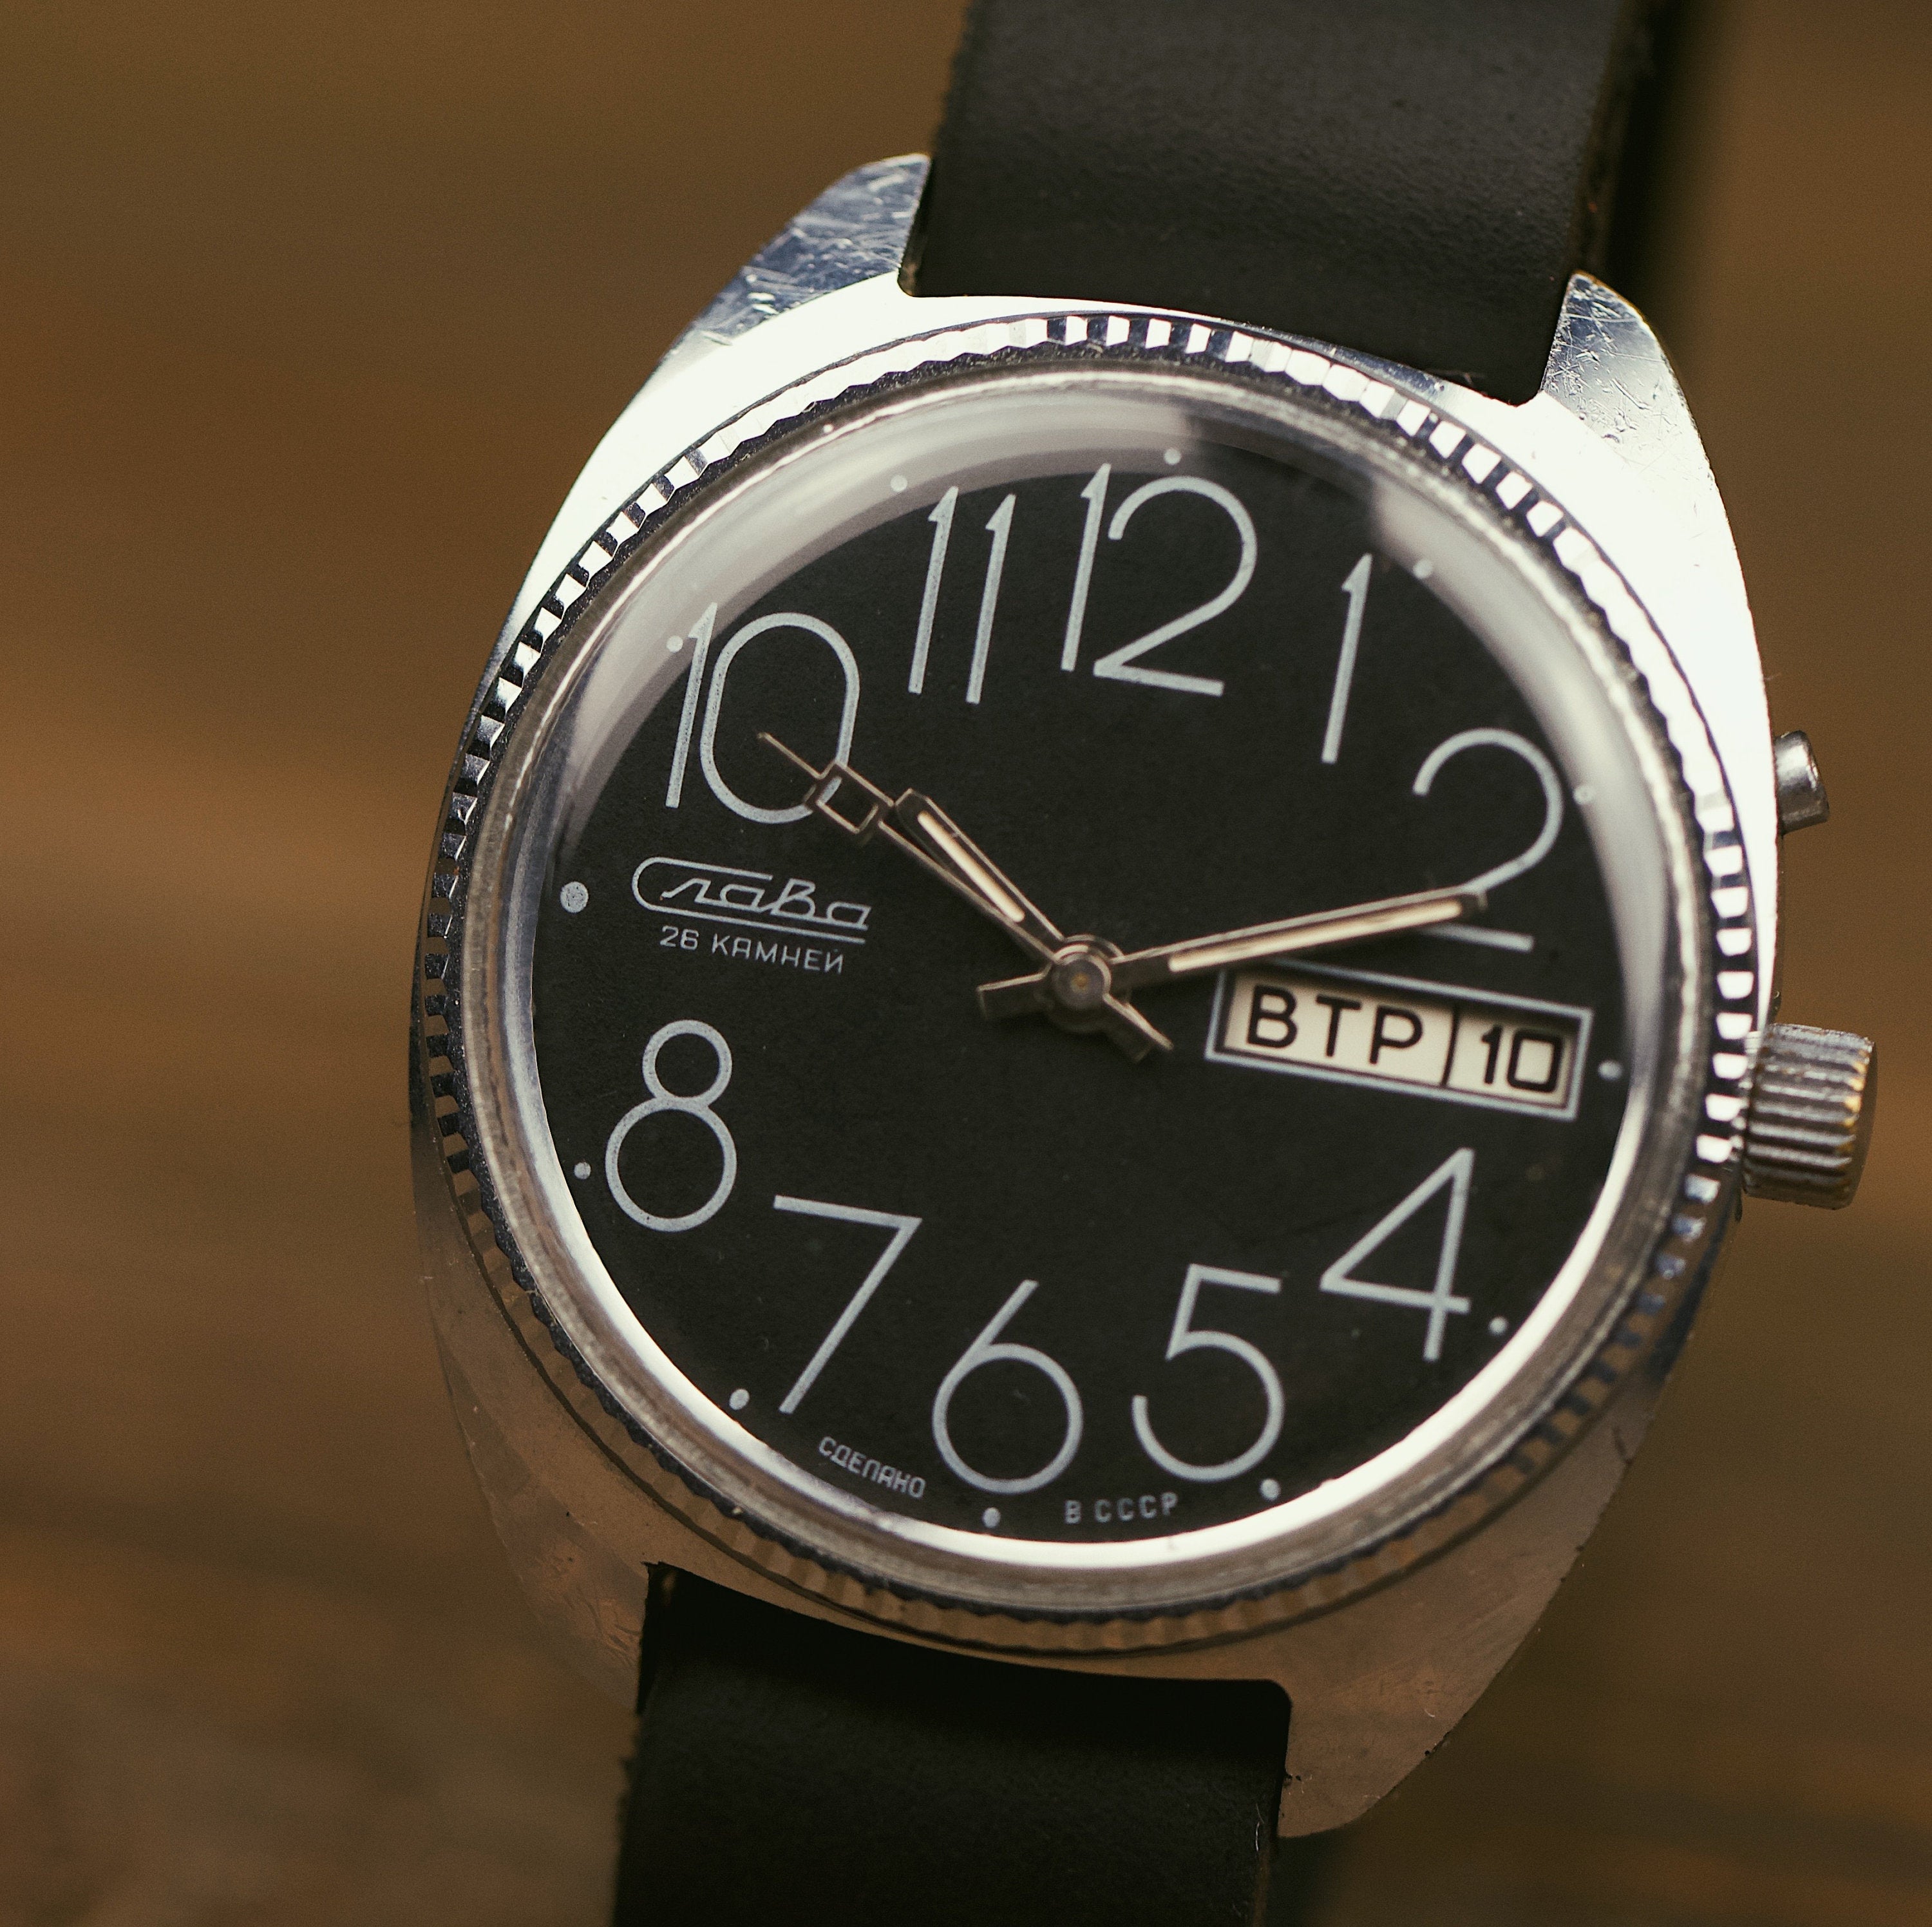 Very rare soviet vintage men's watch ''Slava" 26 jewels with leather nato strap